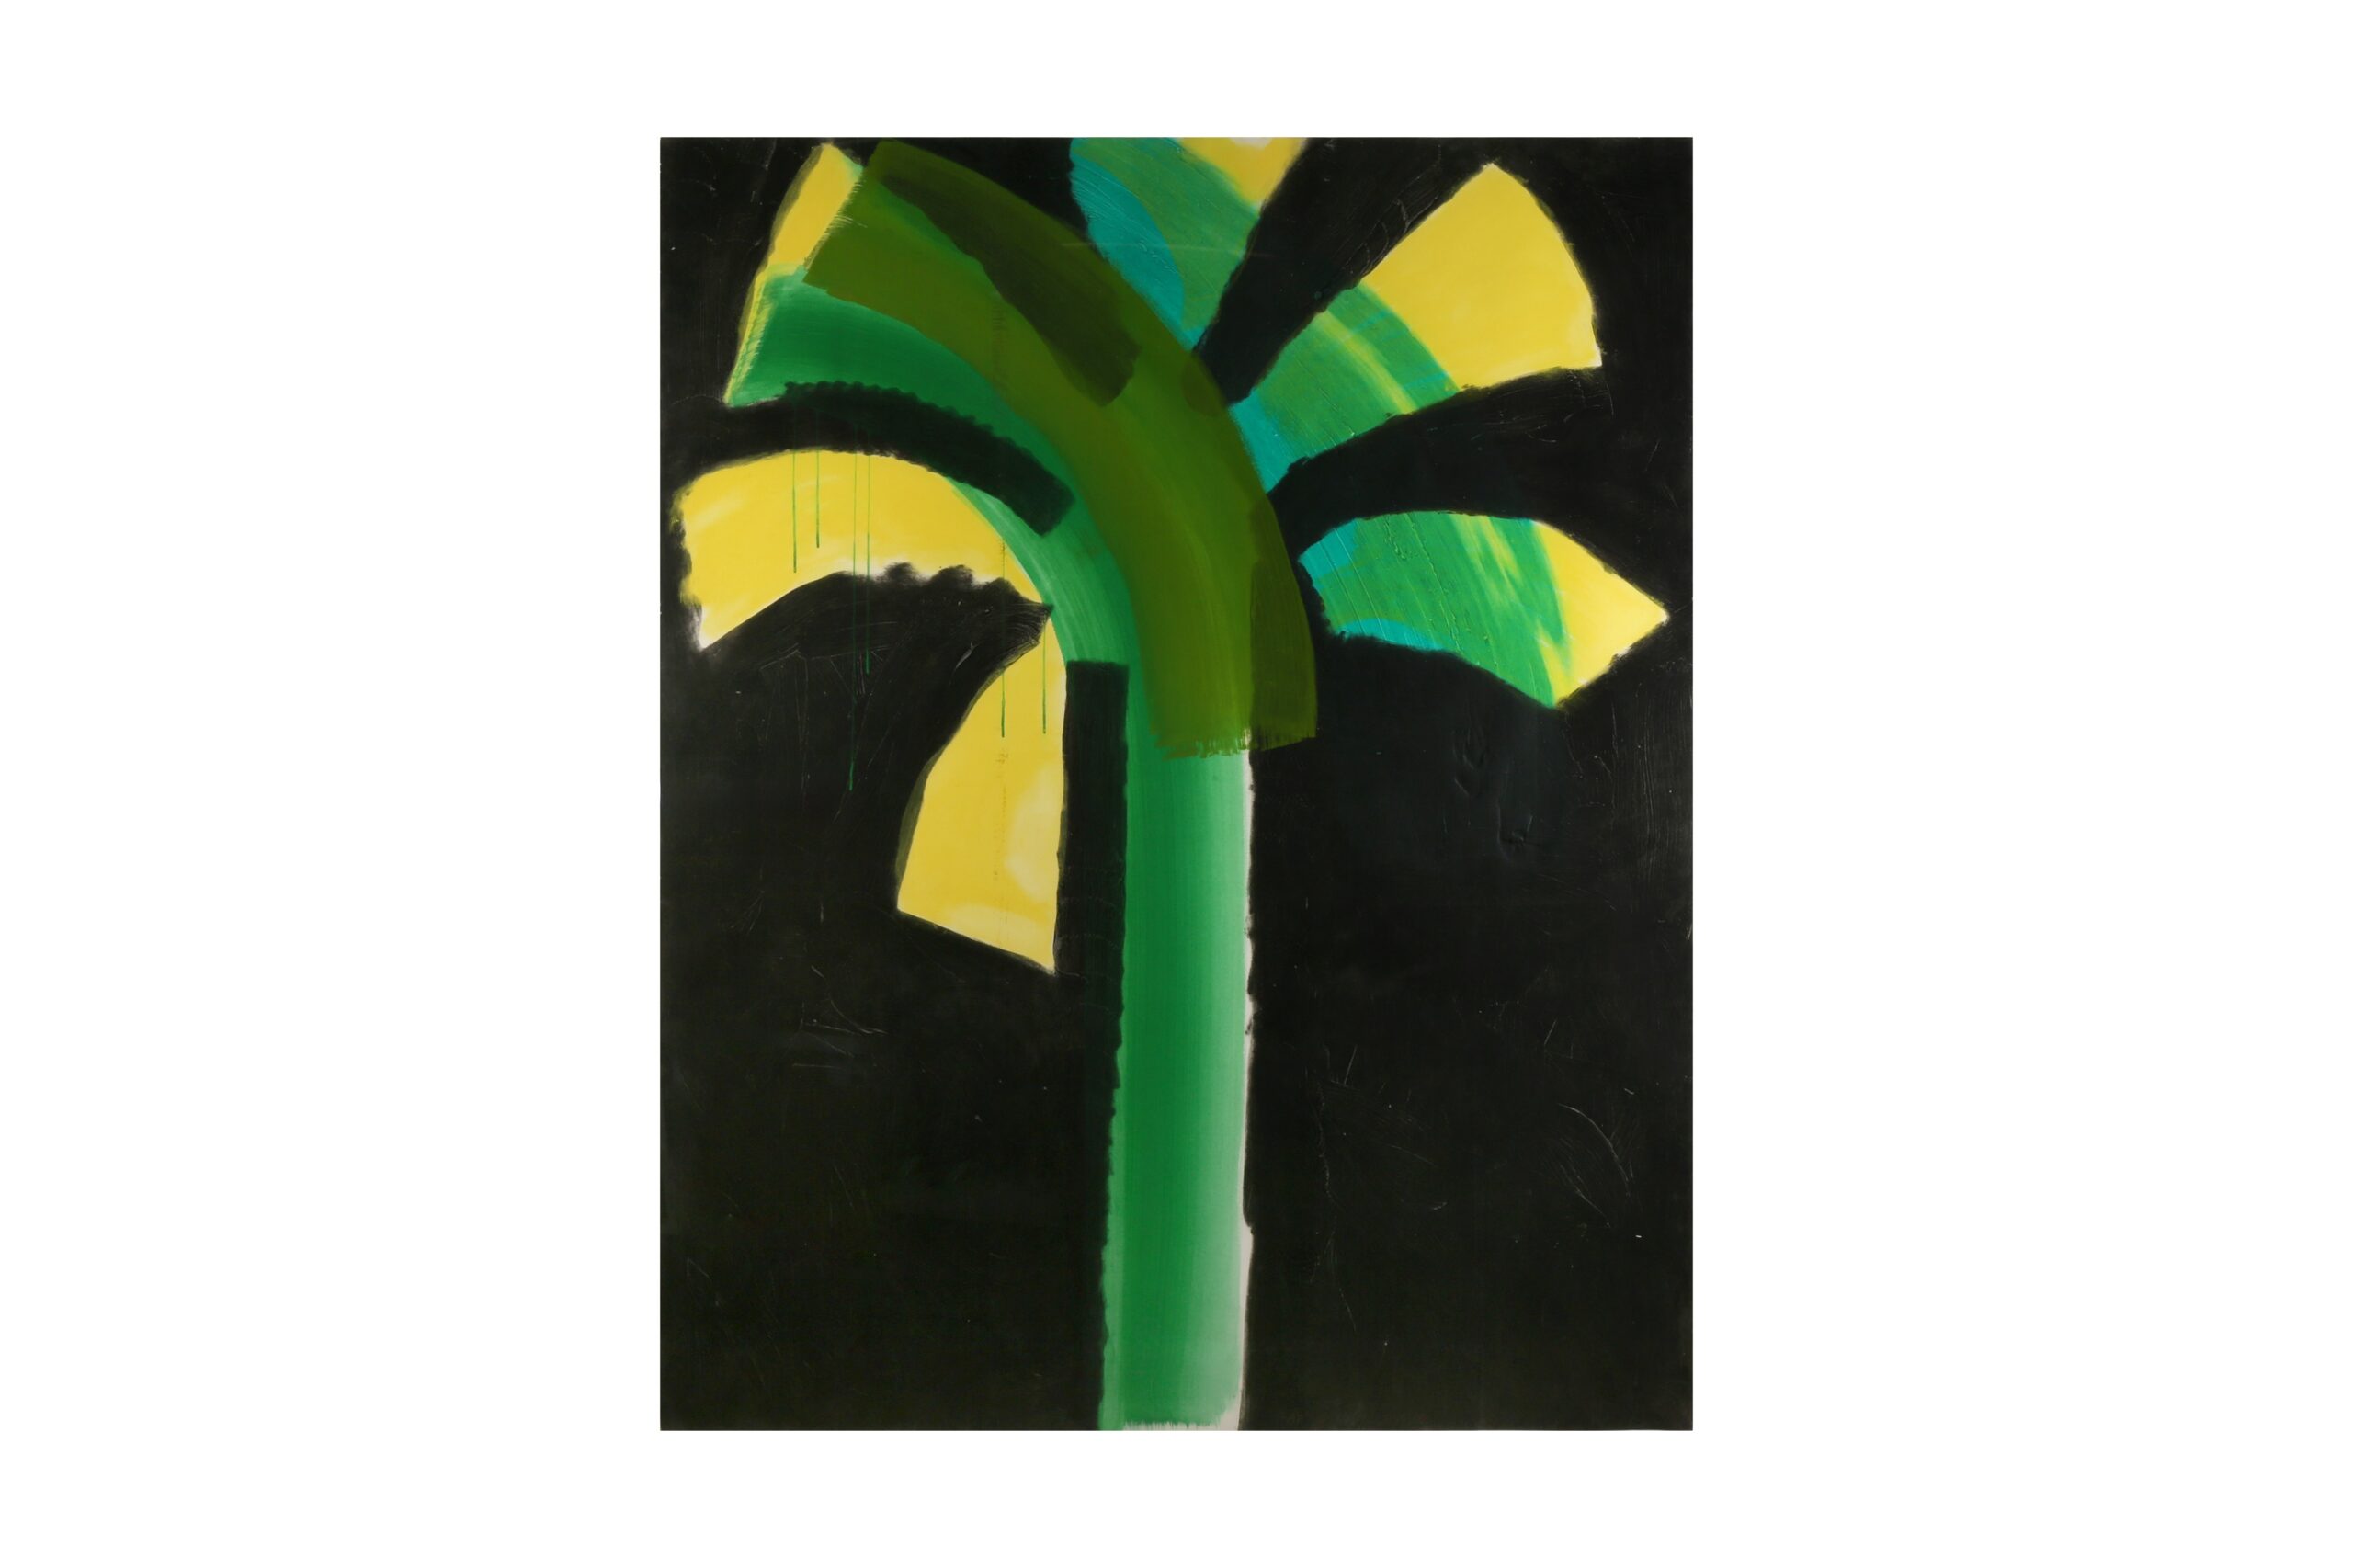 Howard Hodgkin (1932-2017) intaglio etching Night Palm